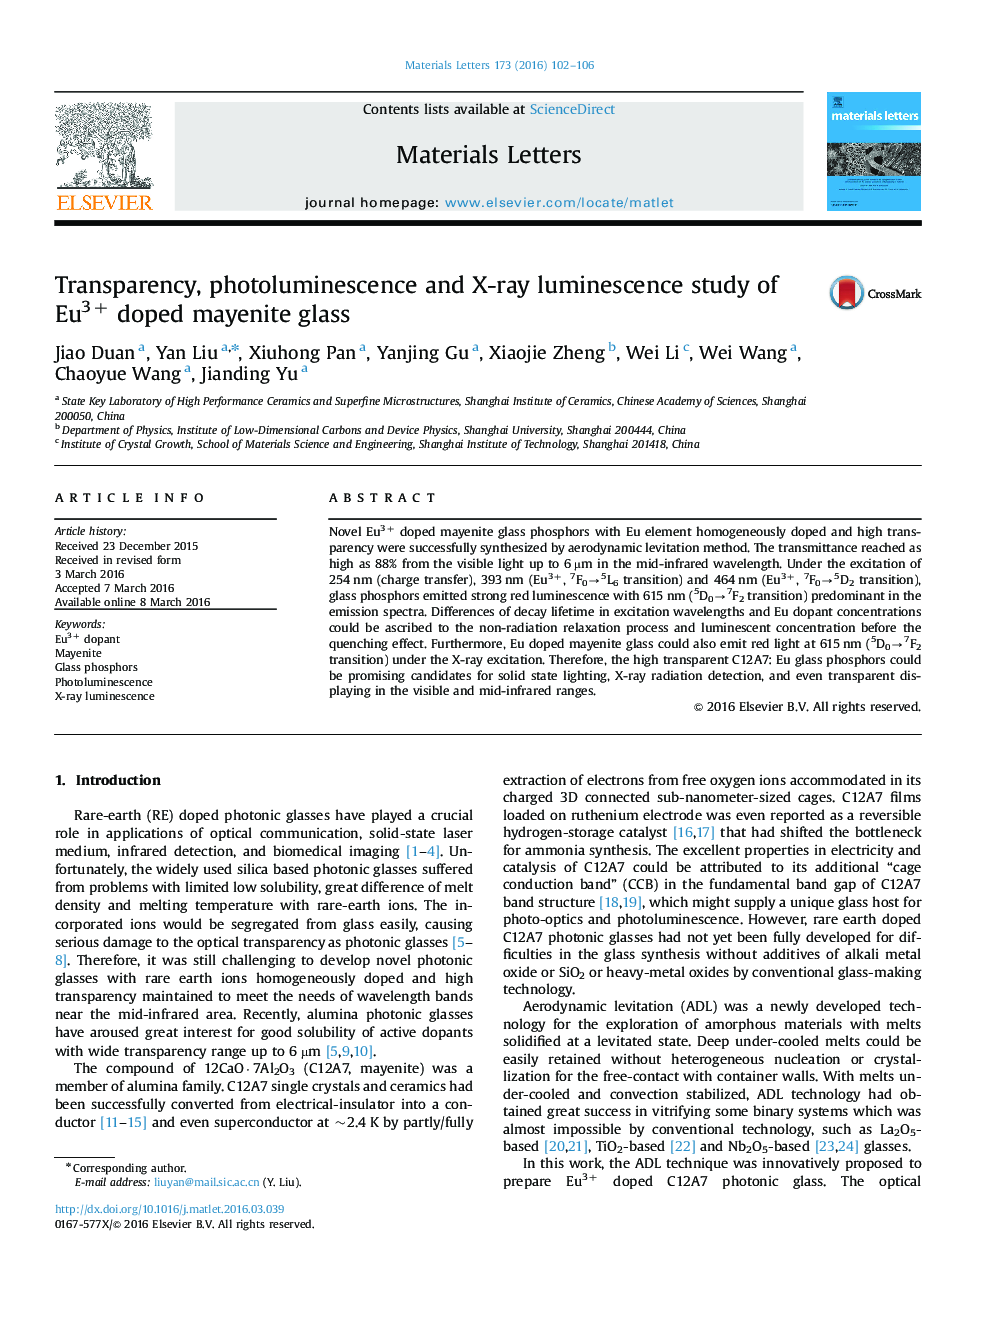 Transparency, photoluminescence and X-ray luminescence study of Eu3+ doped mayenite glass